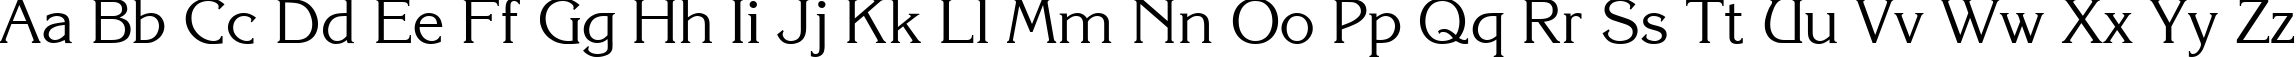 Пример написания английского алфавита шрифтом KarinaC